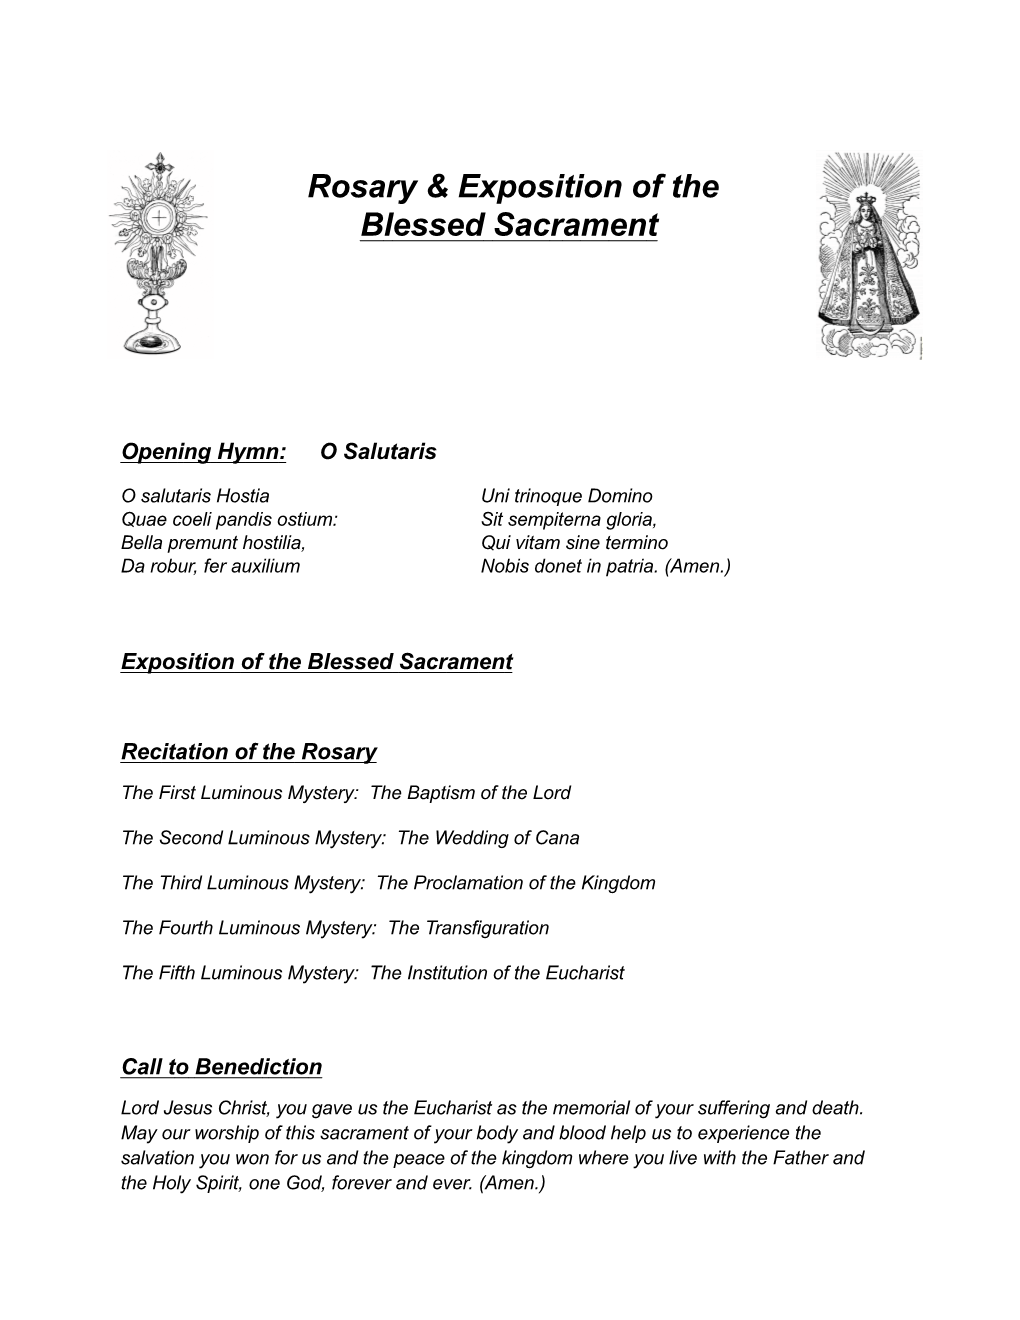 Rosary & Exposition Rev 1